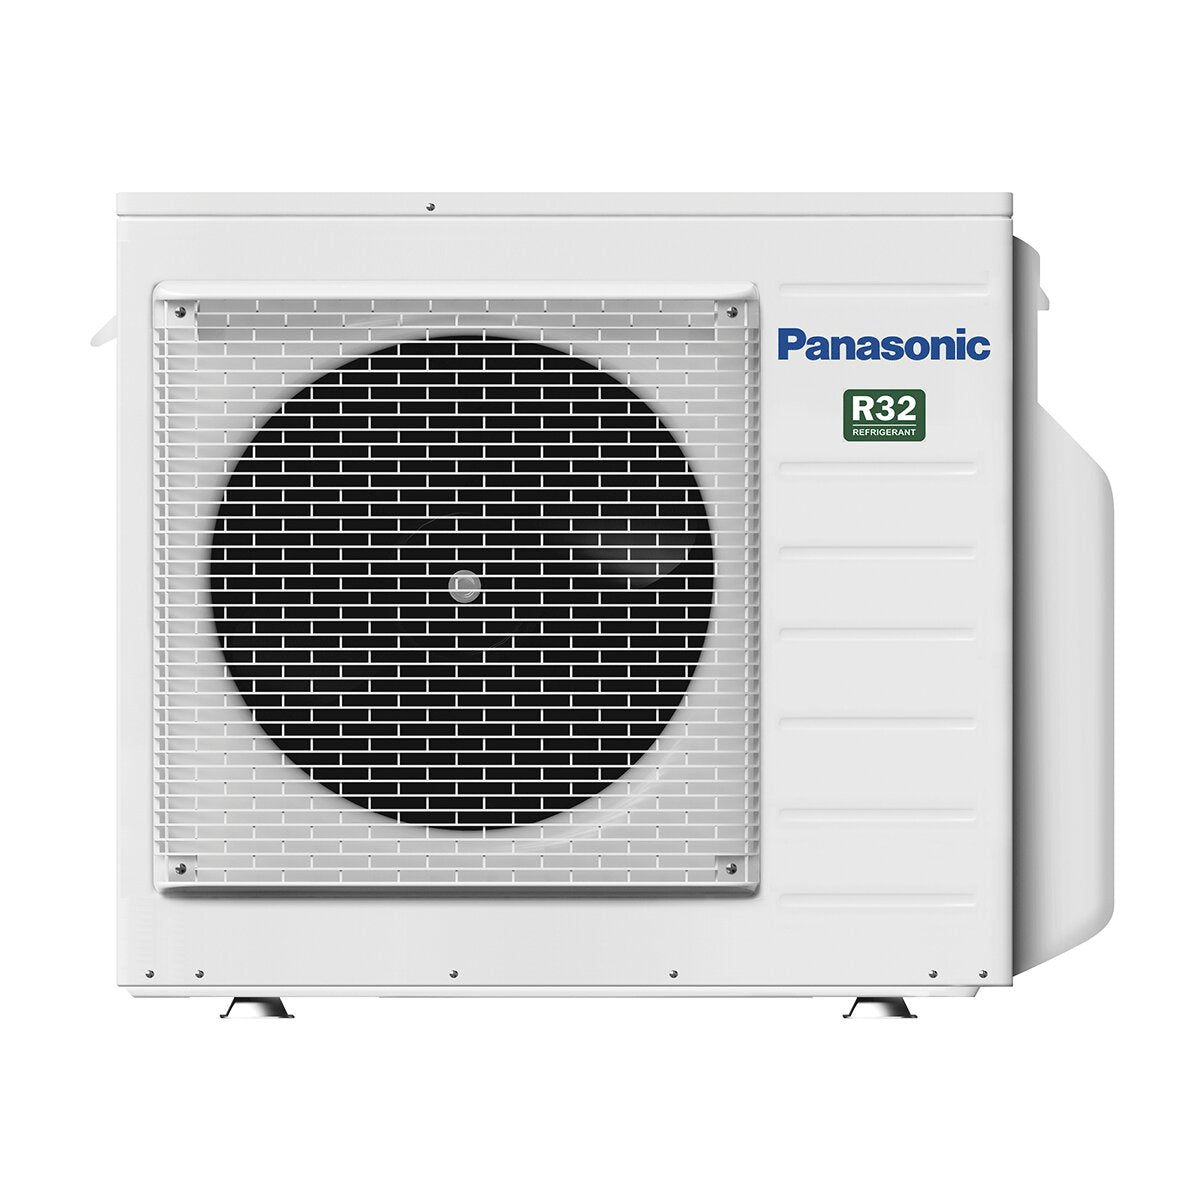 Panasonic TZ Series trial split air conditioner 7000+12000+12000 BTU A+++ wifi external unit 5.2 kW